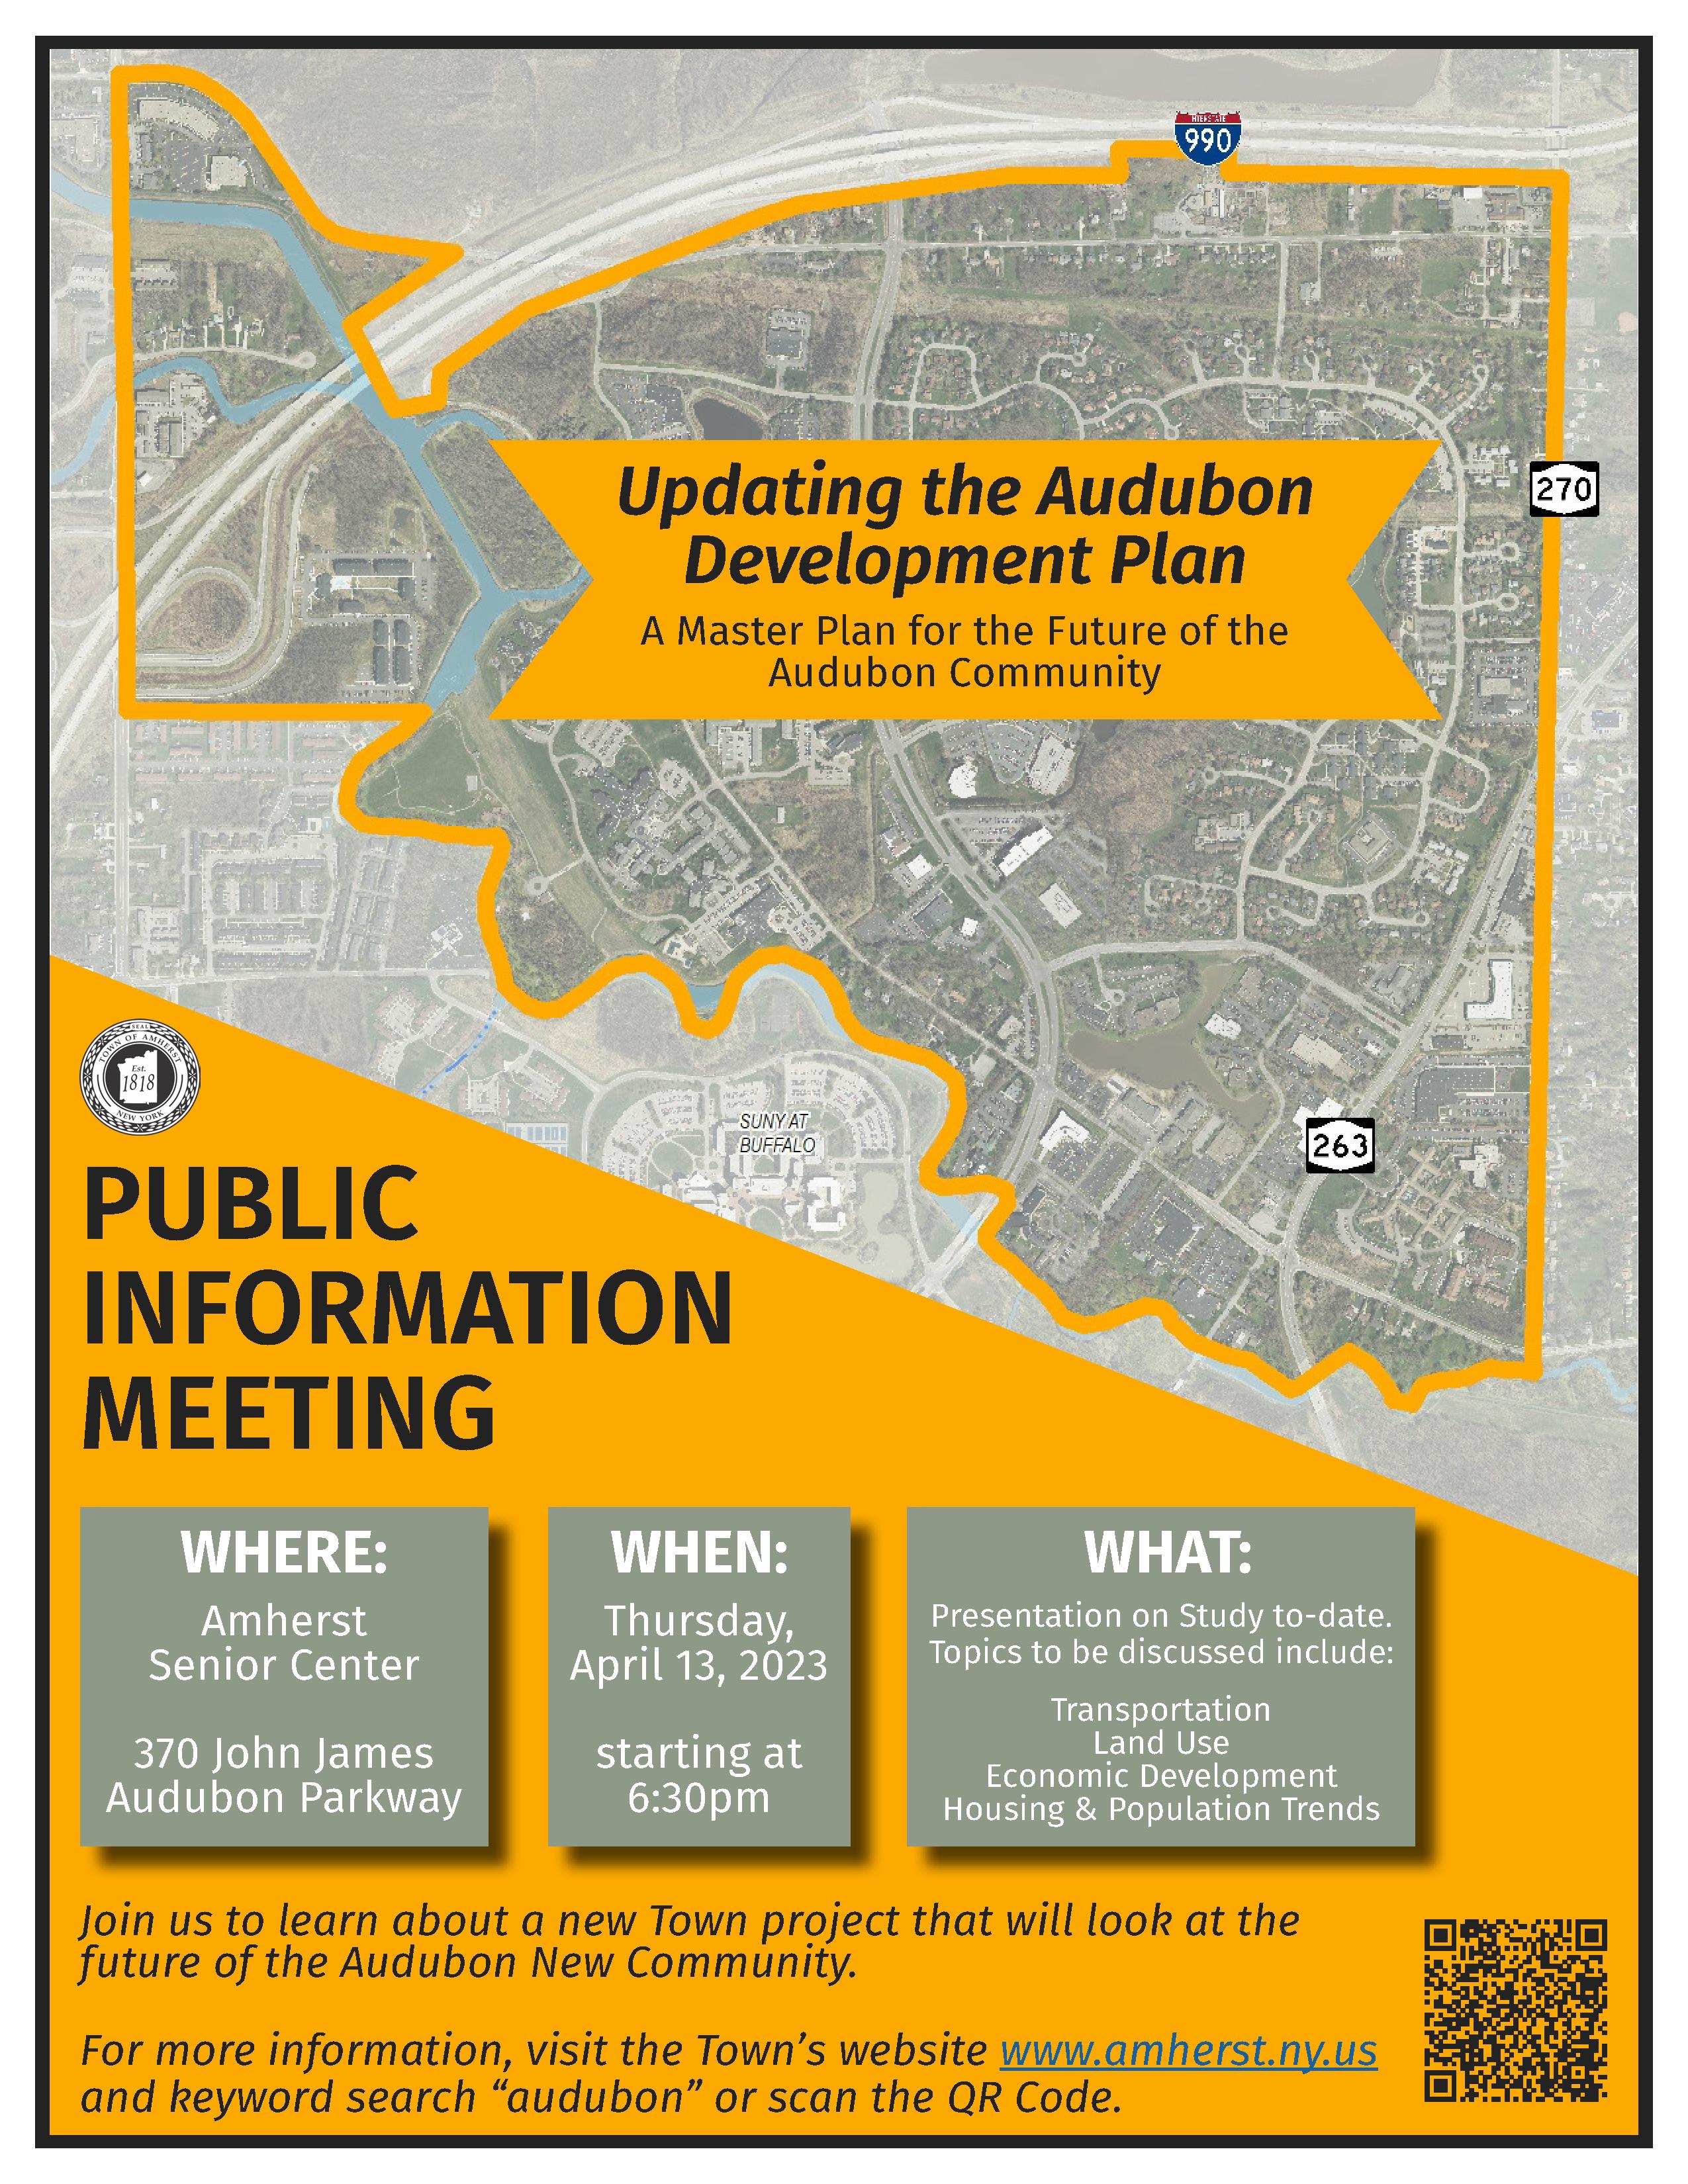 audubon development plan update public information meeting - april 13, 2023 at 6:30pm - senior center 370 john james audubon parkway